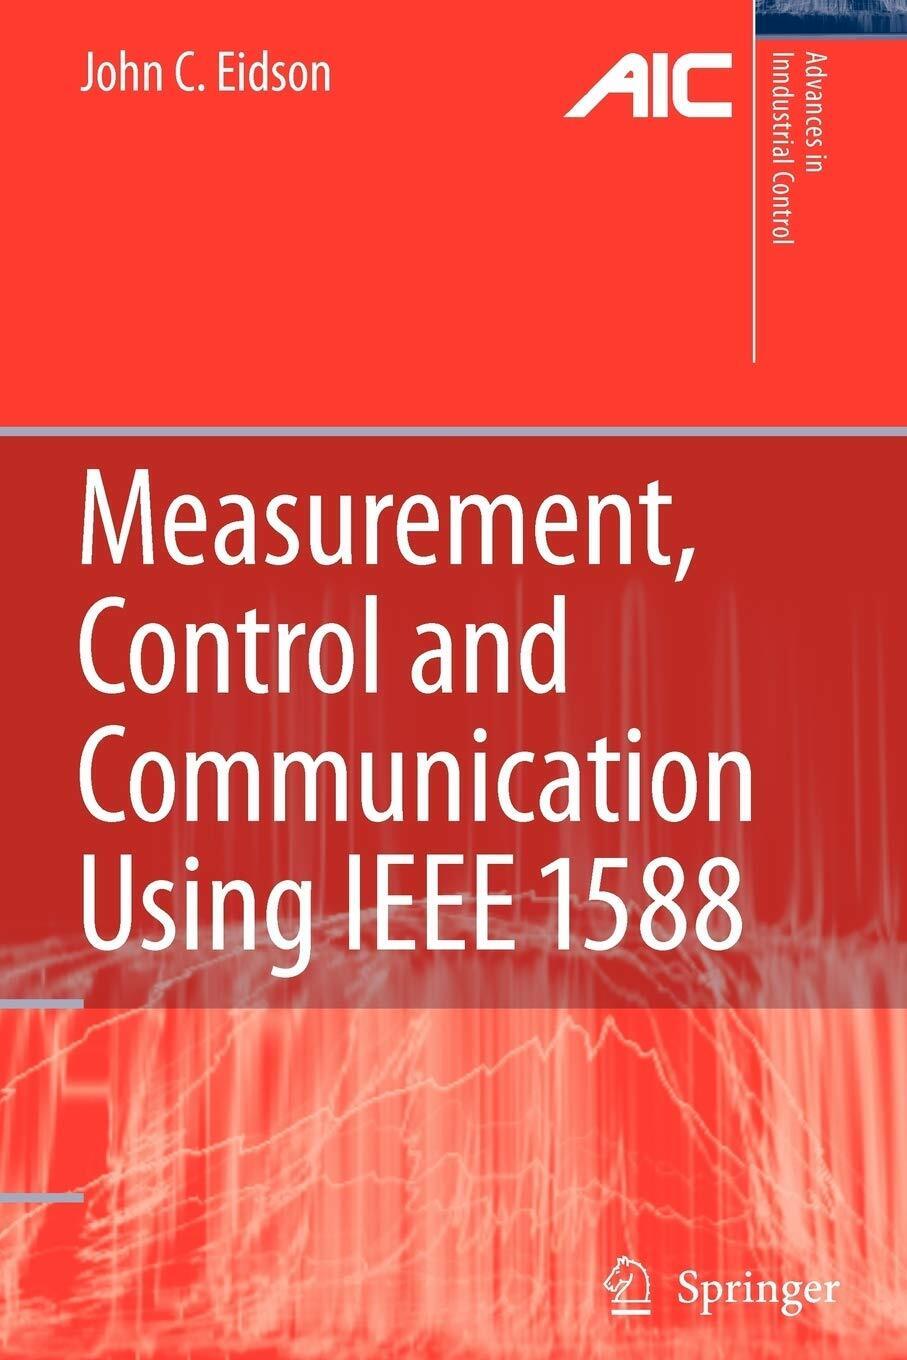 Measurement, Control, and Communication Using IEEE 1588 - John C. Eidson - 2010 libro usato